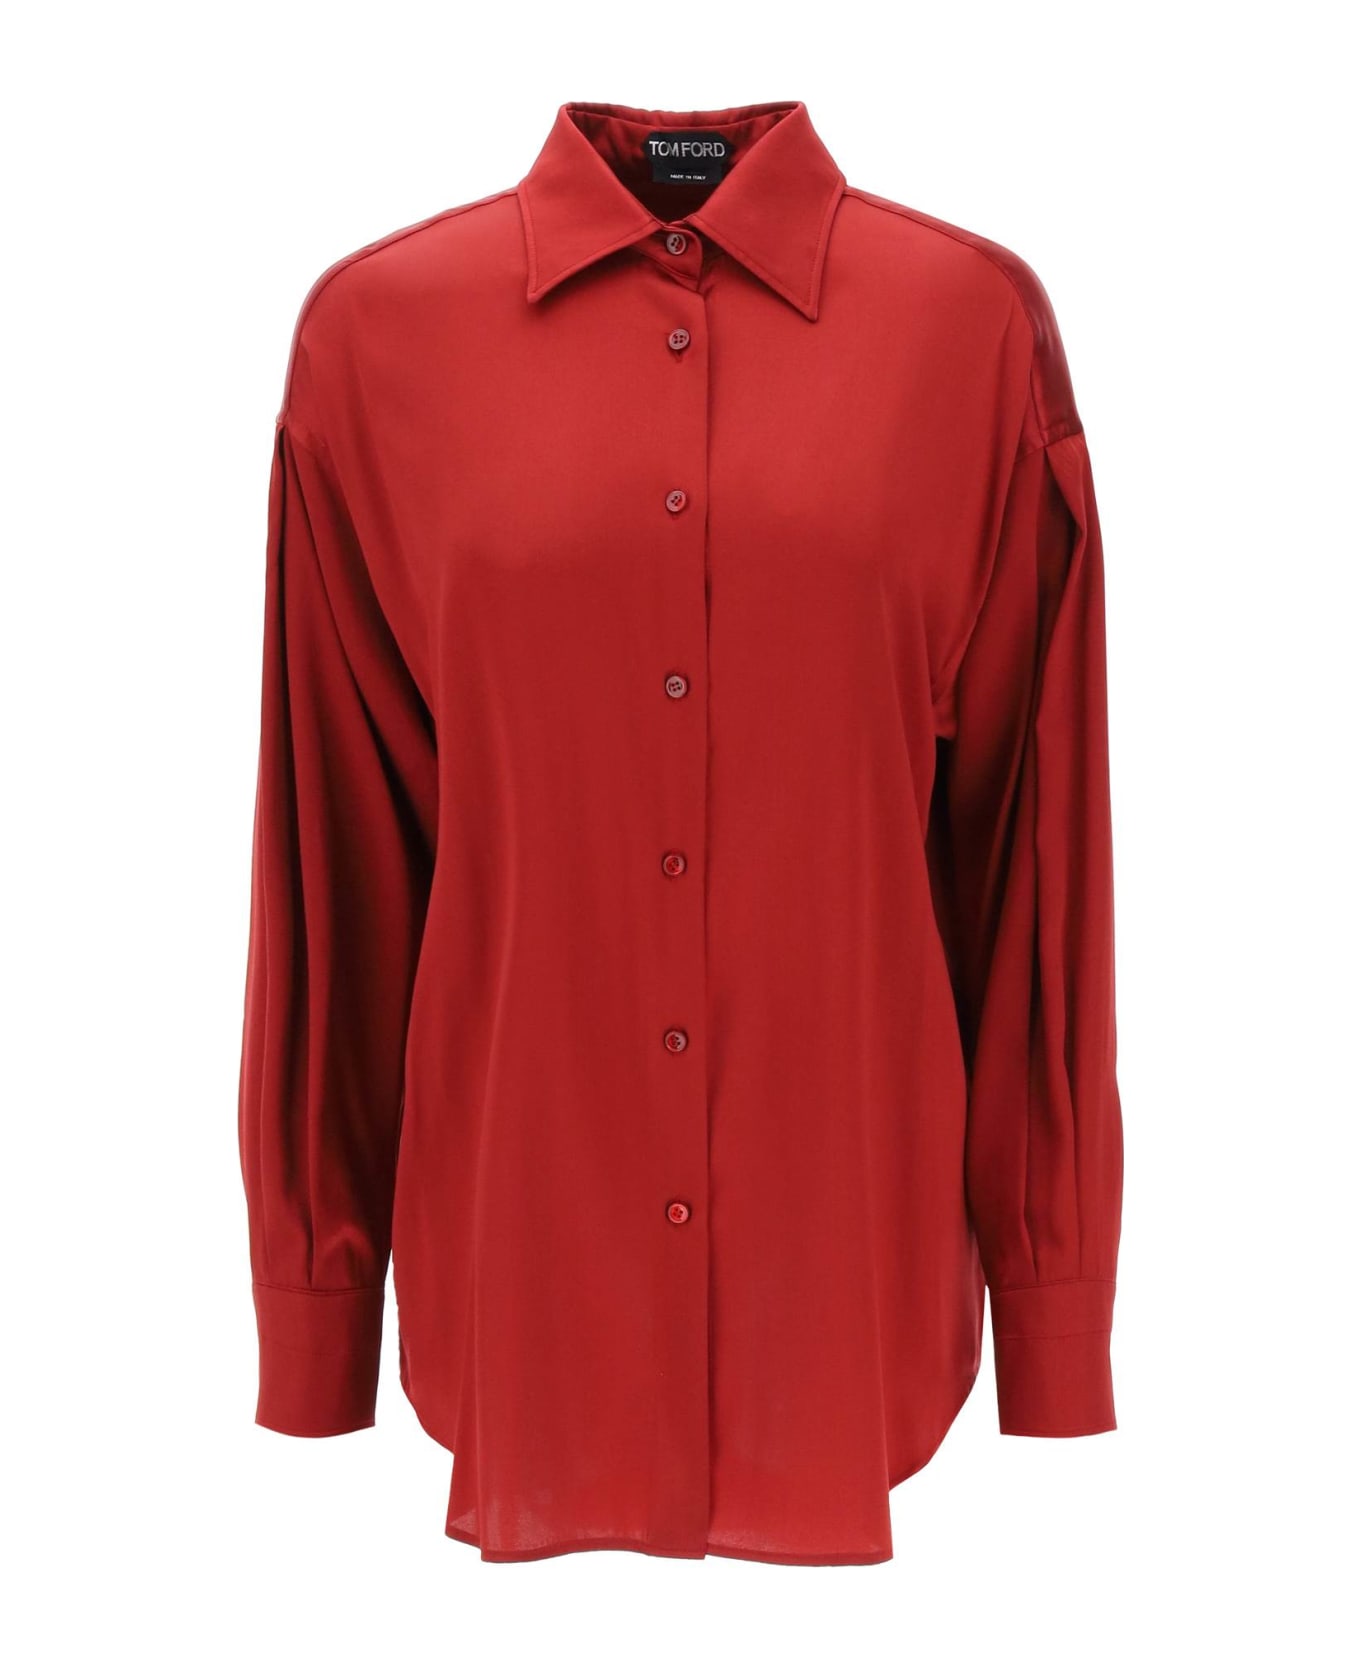 Tom Ford Stretch Silk Satin Shirt - OXBLOOD RED (Red)